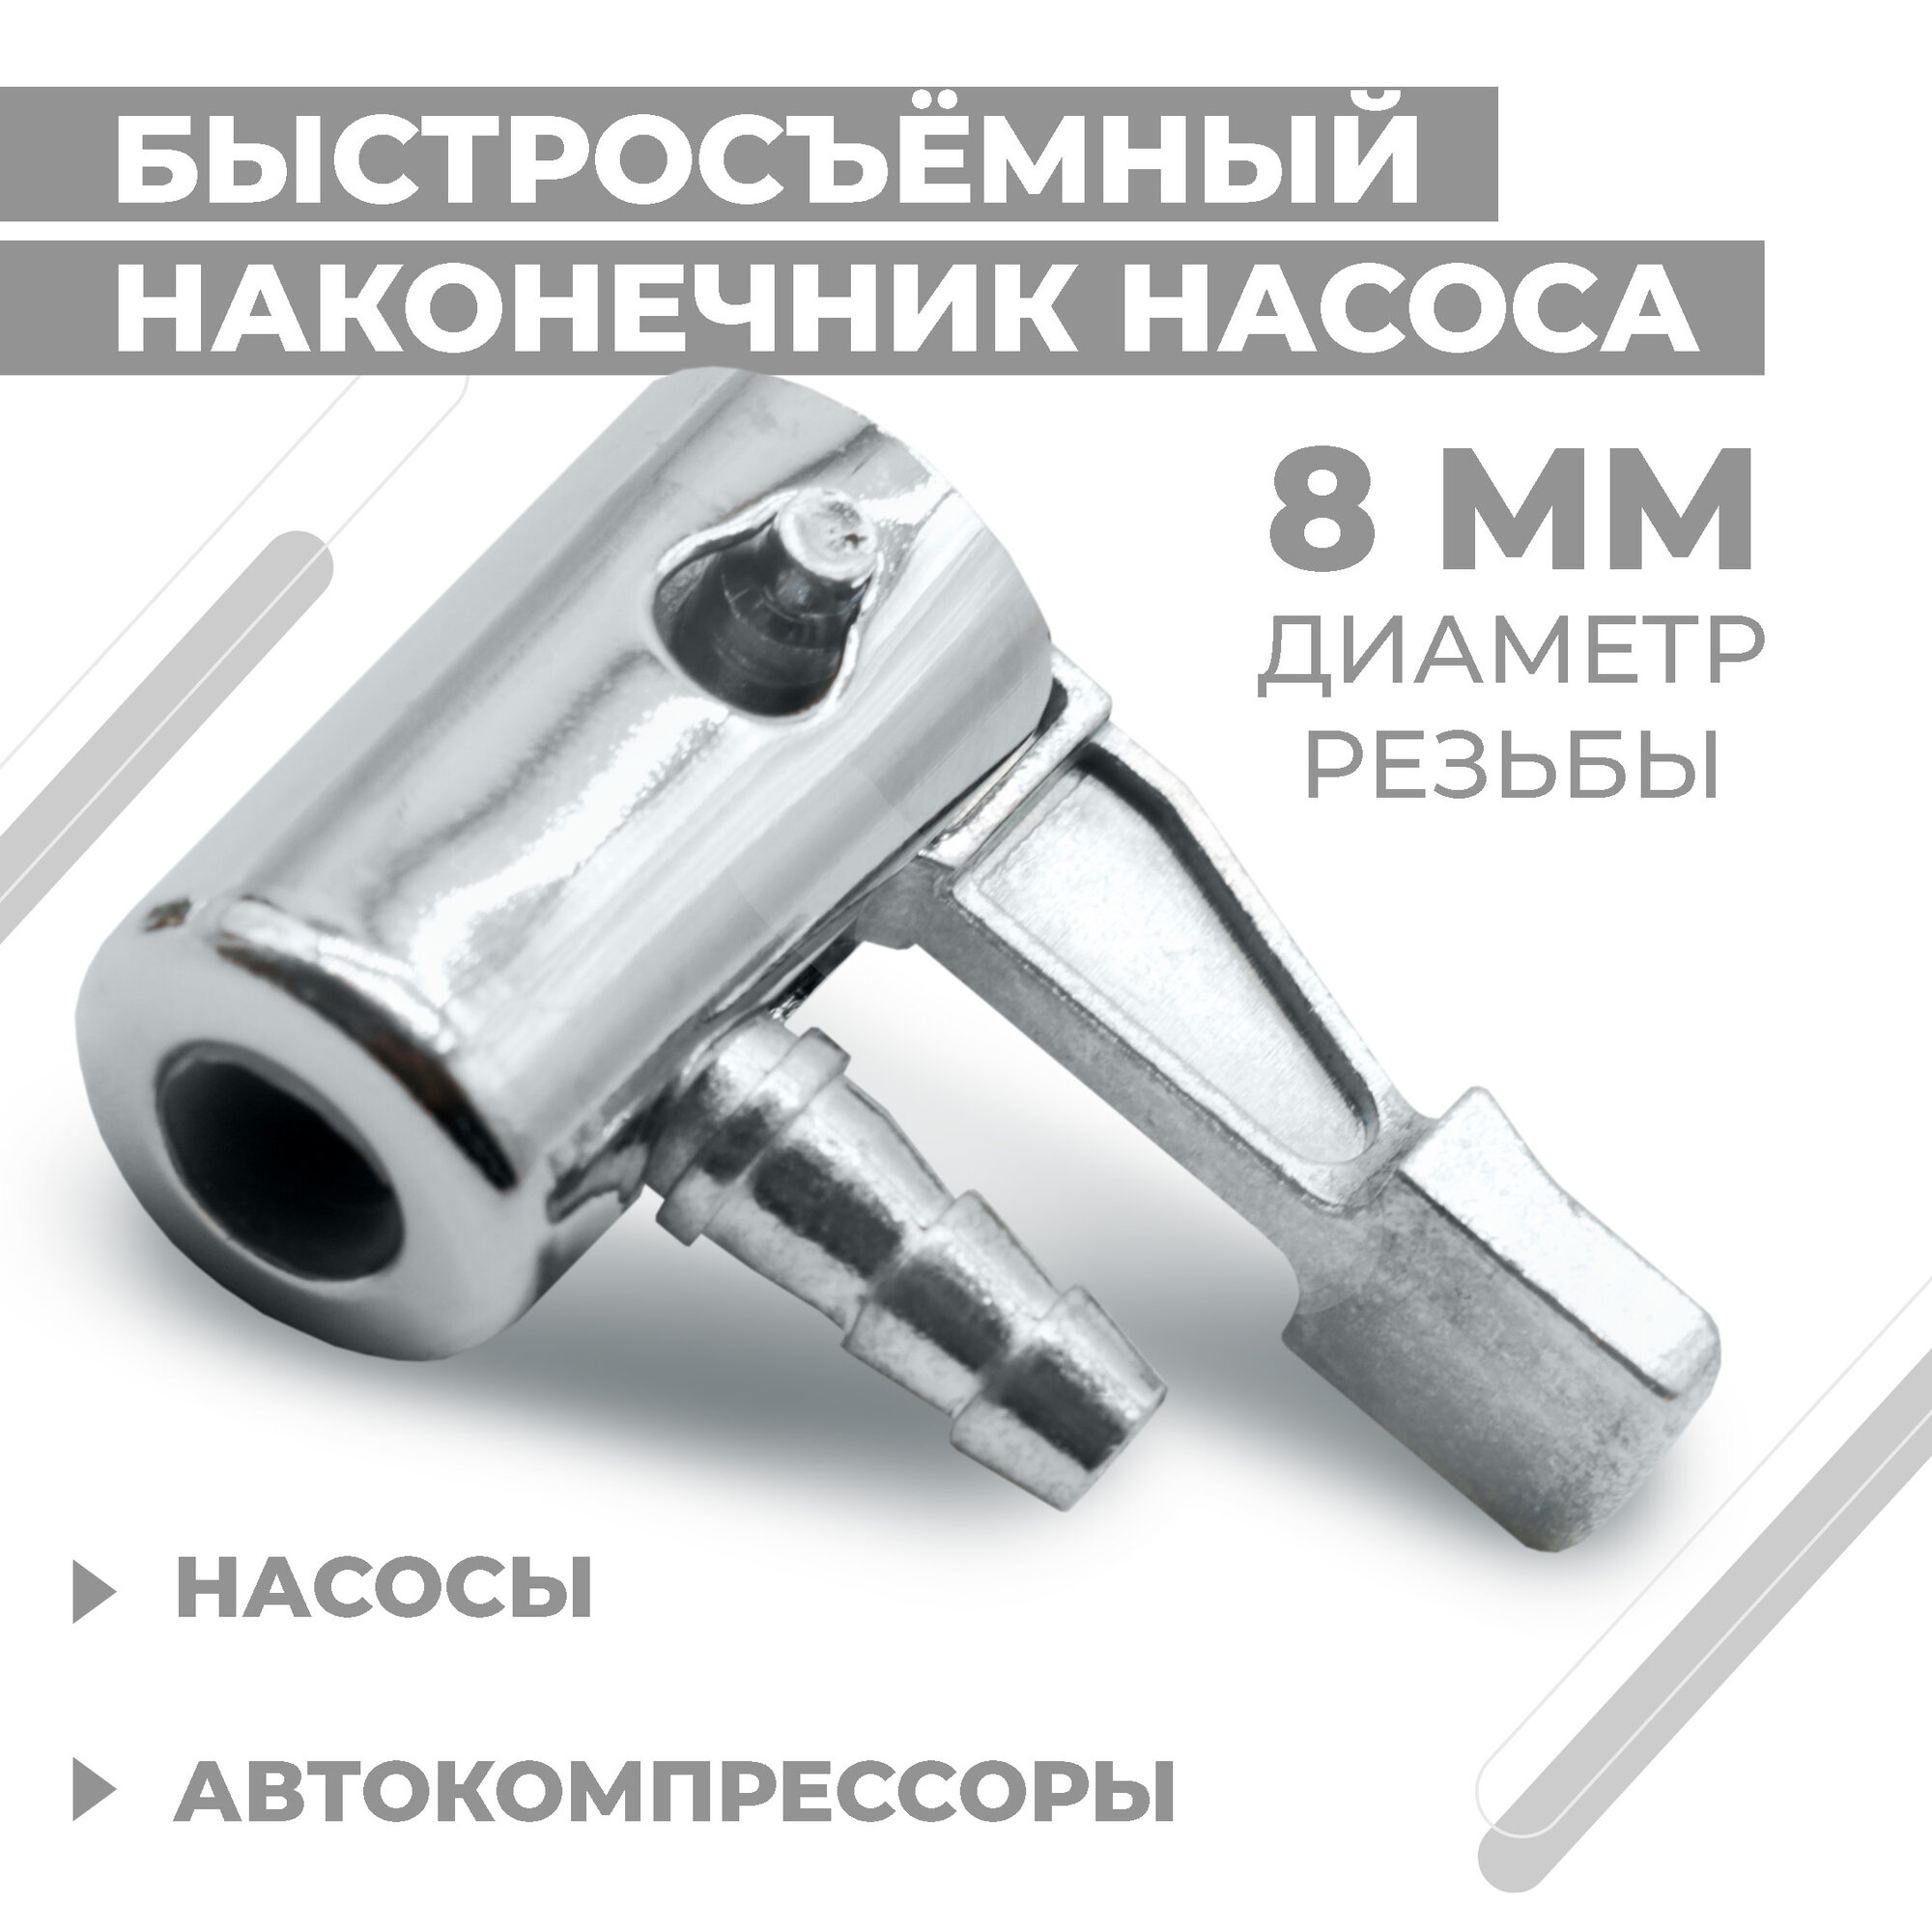 Быстросъёмный наконечник насоса Boomshakalaka диаметра 8 мм насадка для накачки шин